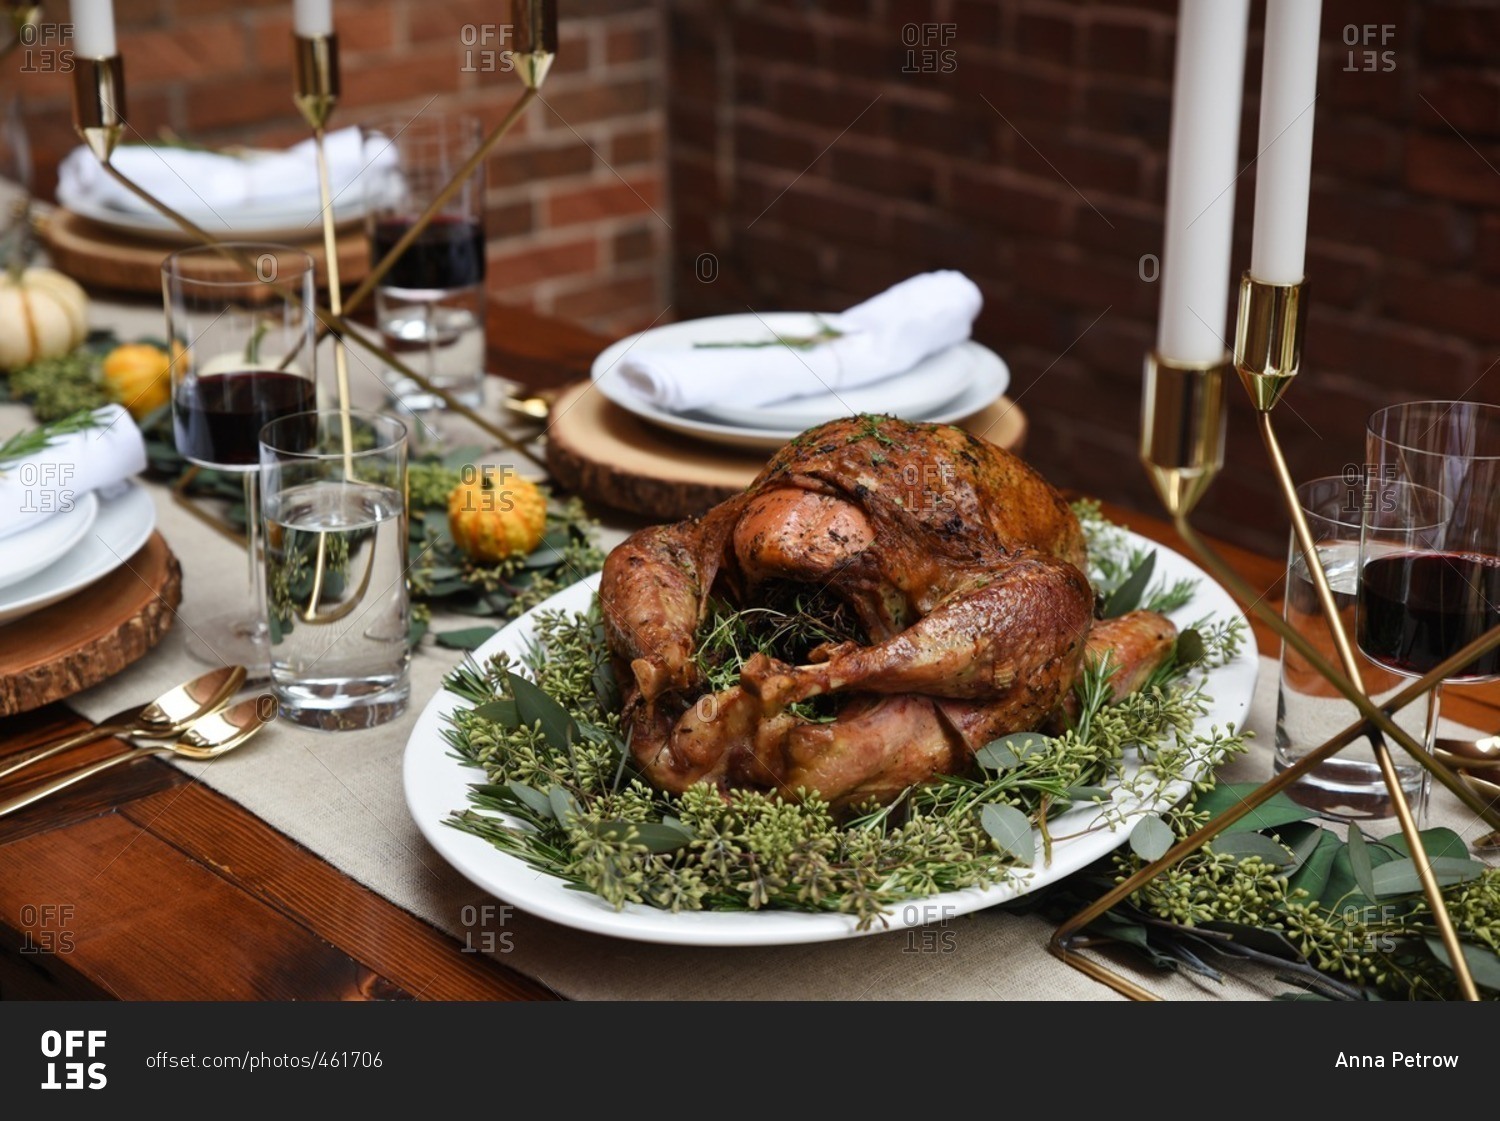 Roasted seasoned turkey on a bed of green garnish